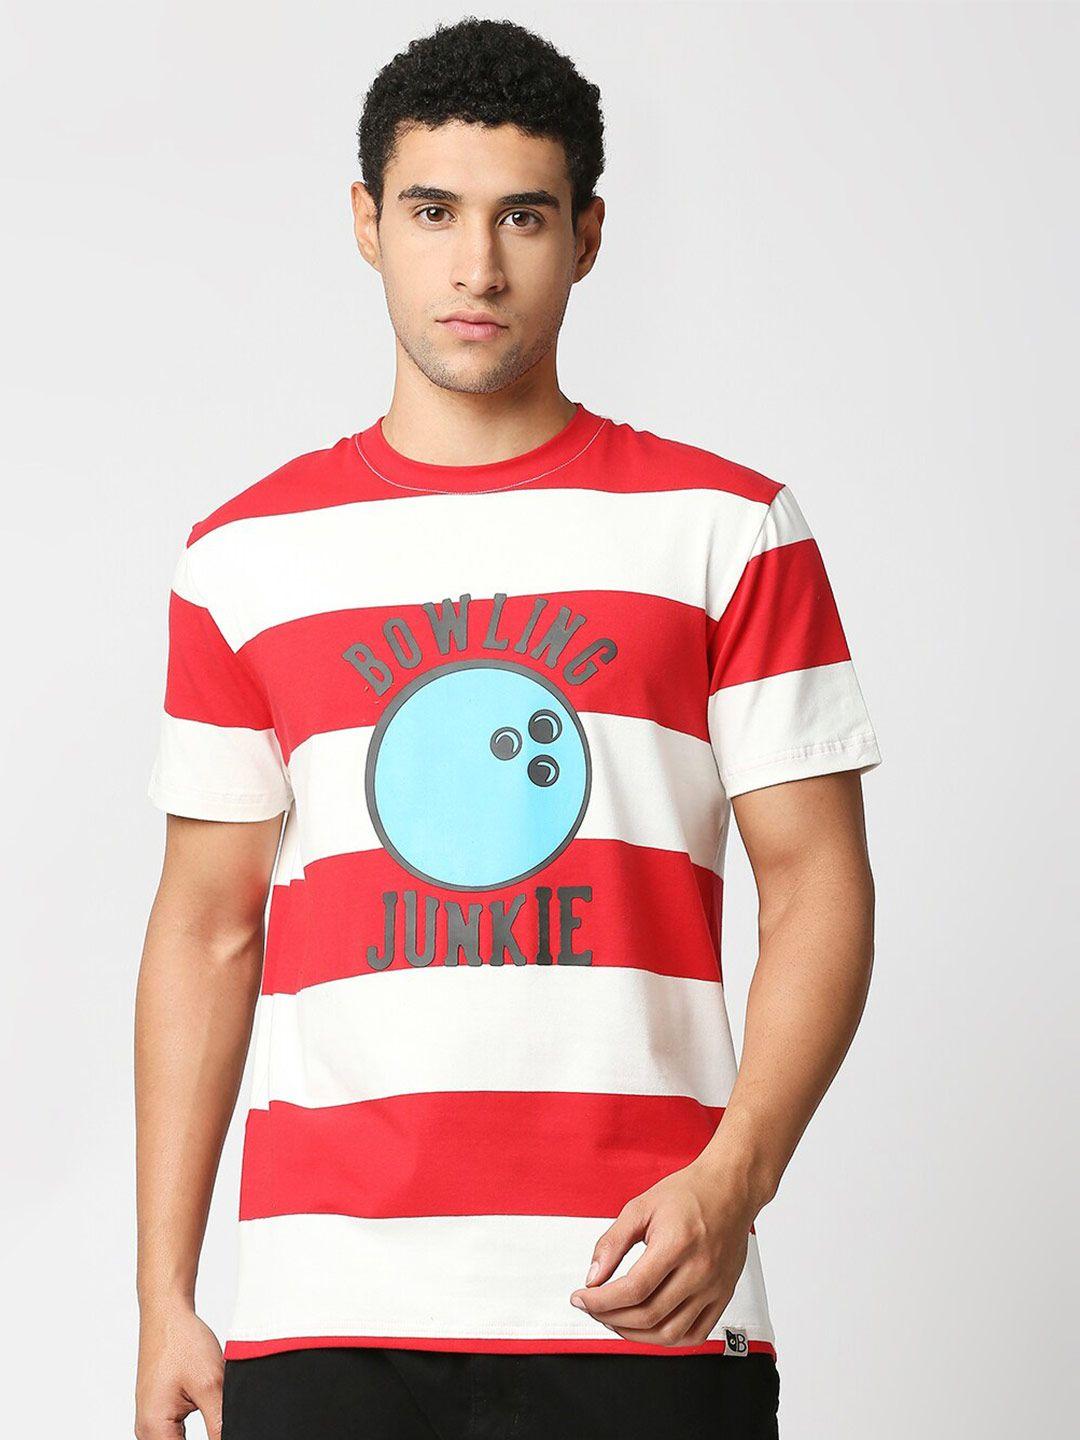 blamblack men red & white striped t-shirt